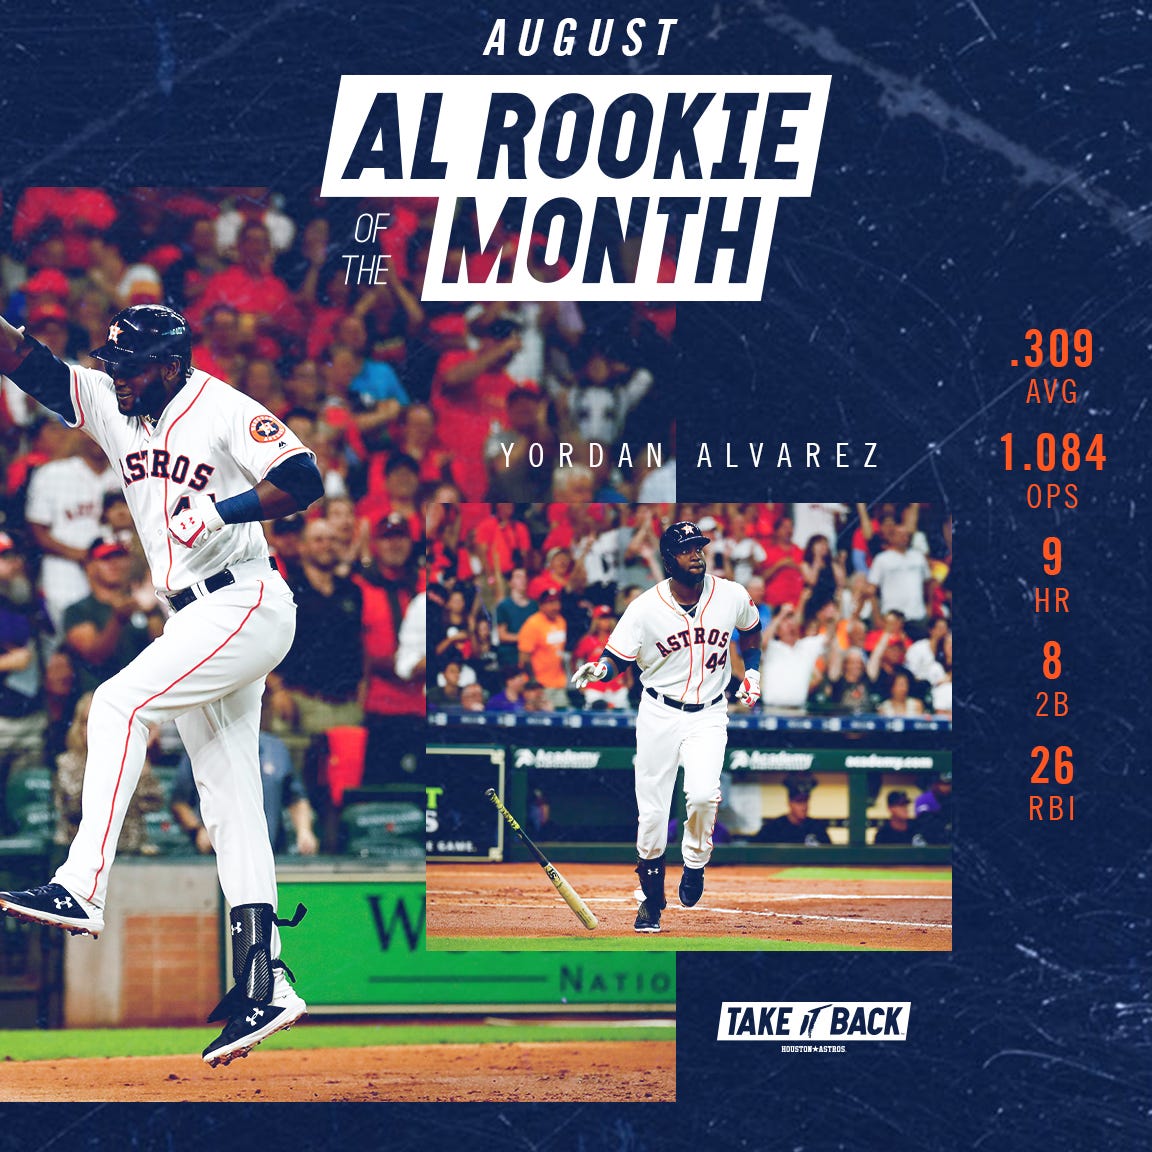 Alvarez, Bregman earn AL Monthly Awards for August, by Houston Astros